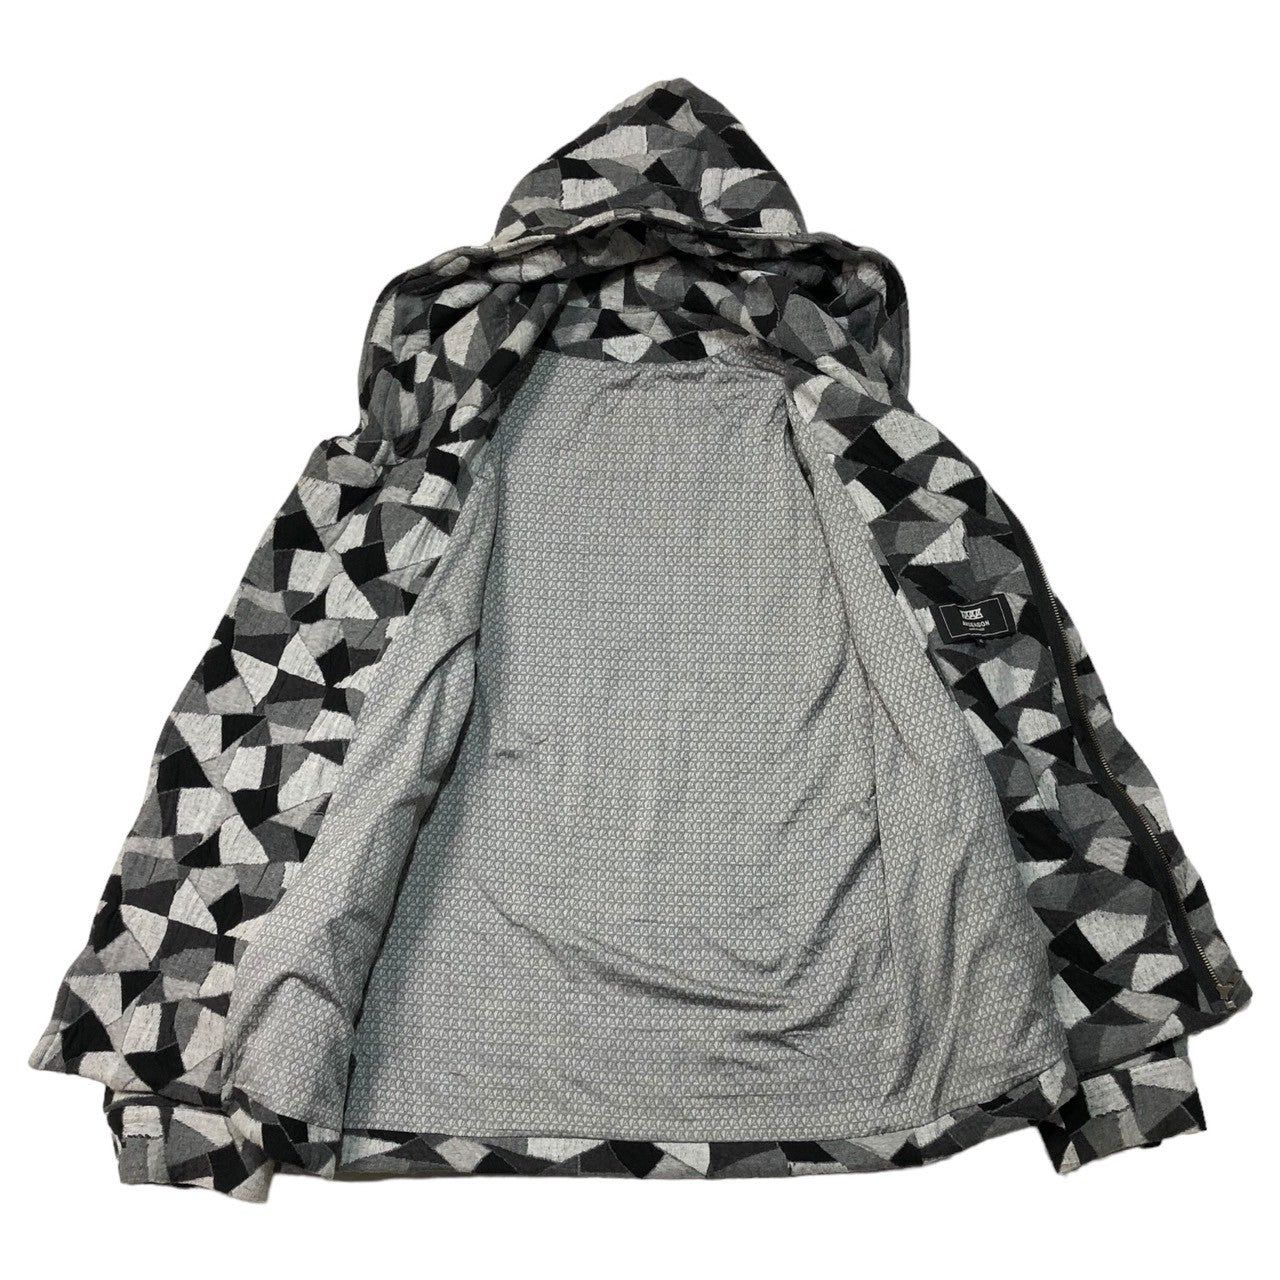 ANREALAGE(アンリアレイジ) wire hooded zip up hoodie ワイヤー フーデッド ジップアップ パーカー SIZE FREE グレー×ブラック